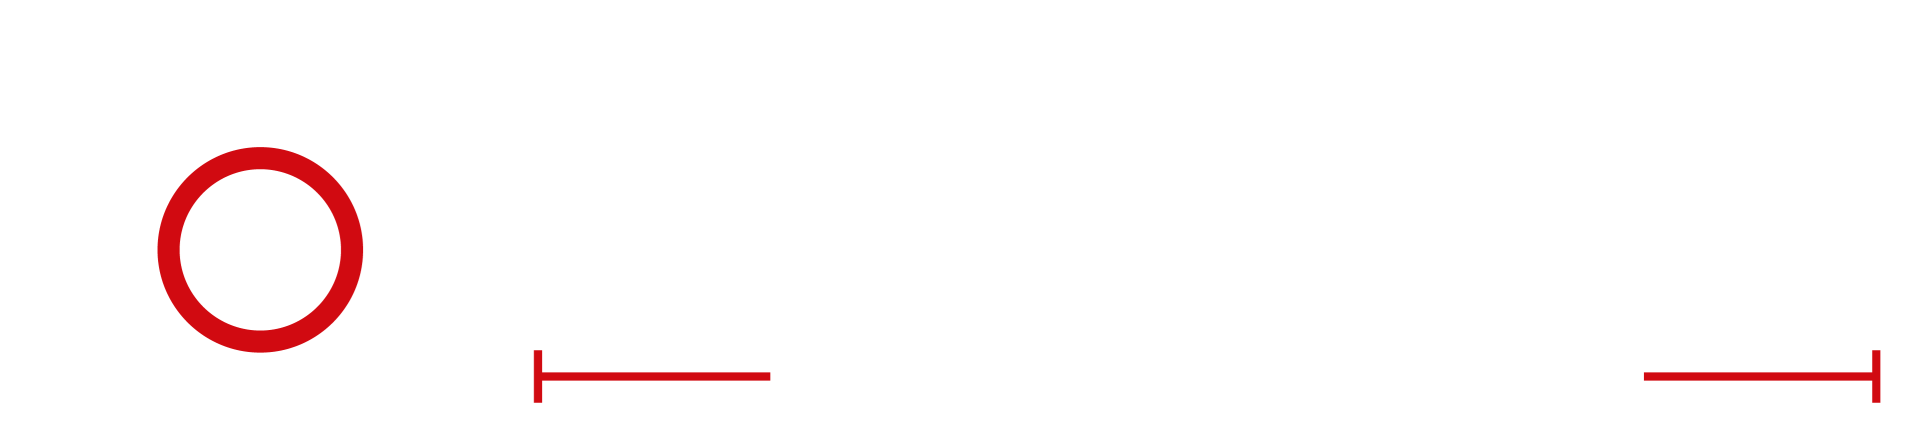 Phillip Smith Photography